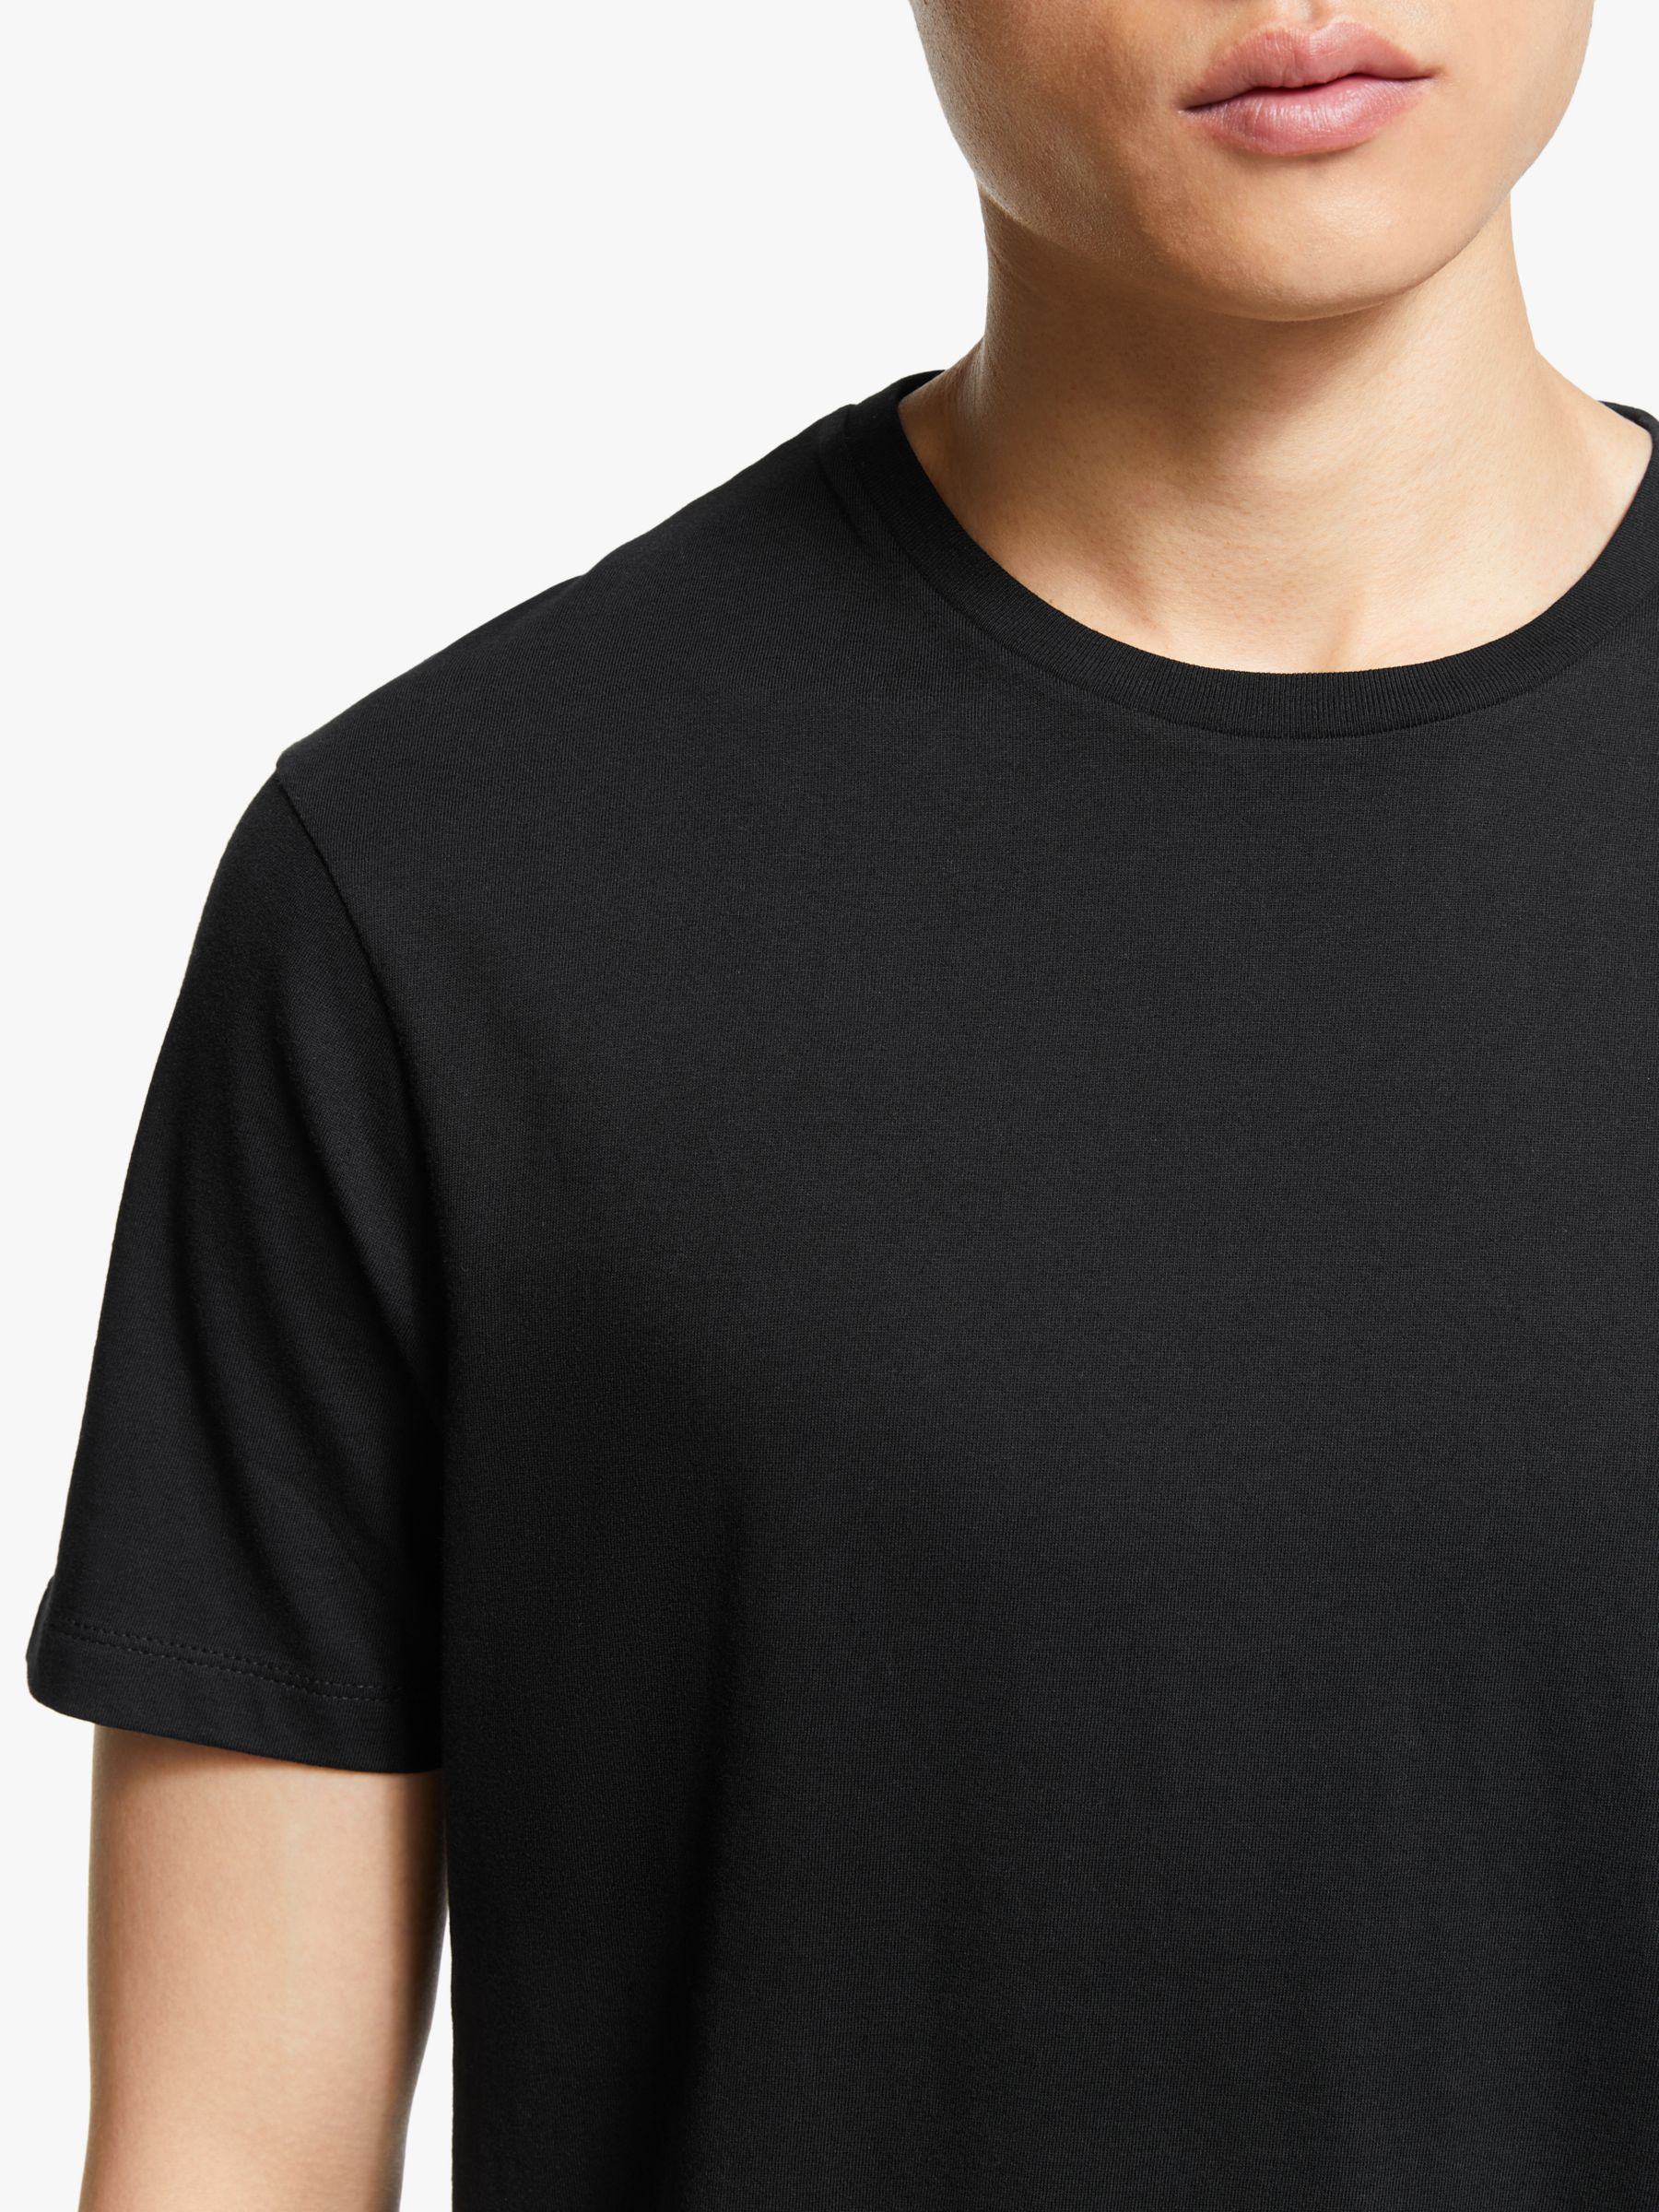 Kin Plain Crew Neck T-Shirt, Black at John Lewis & Partners